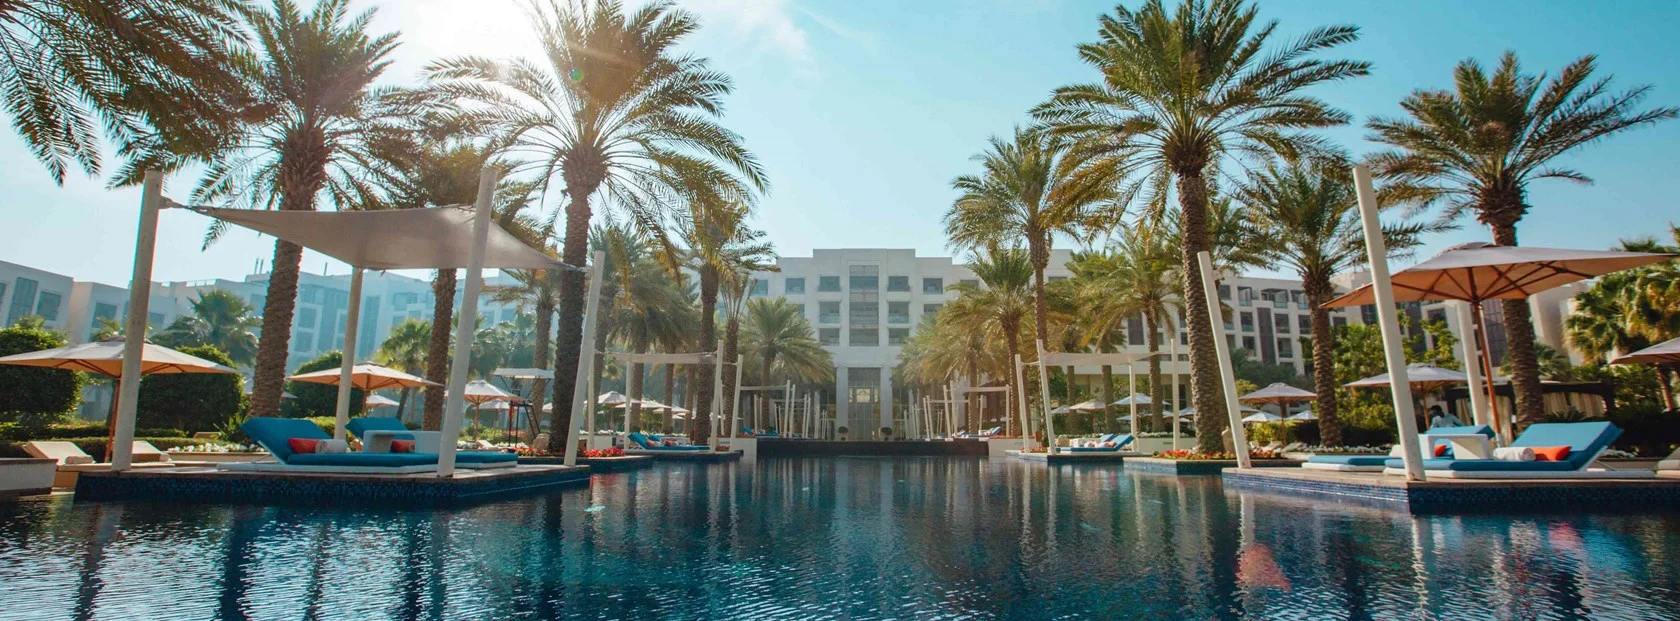 10 of the best staycation destinations in UAE - Park Hyatt Abu Dhabi Hotel and Villas